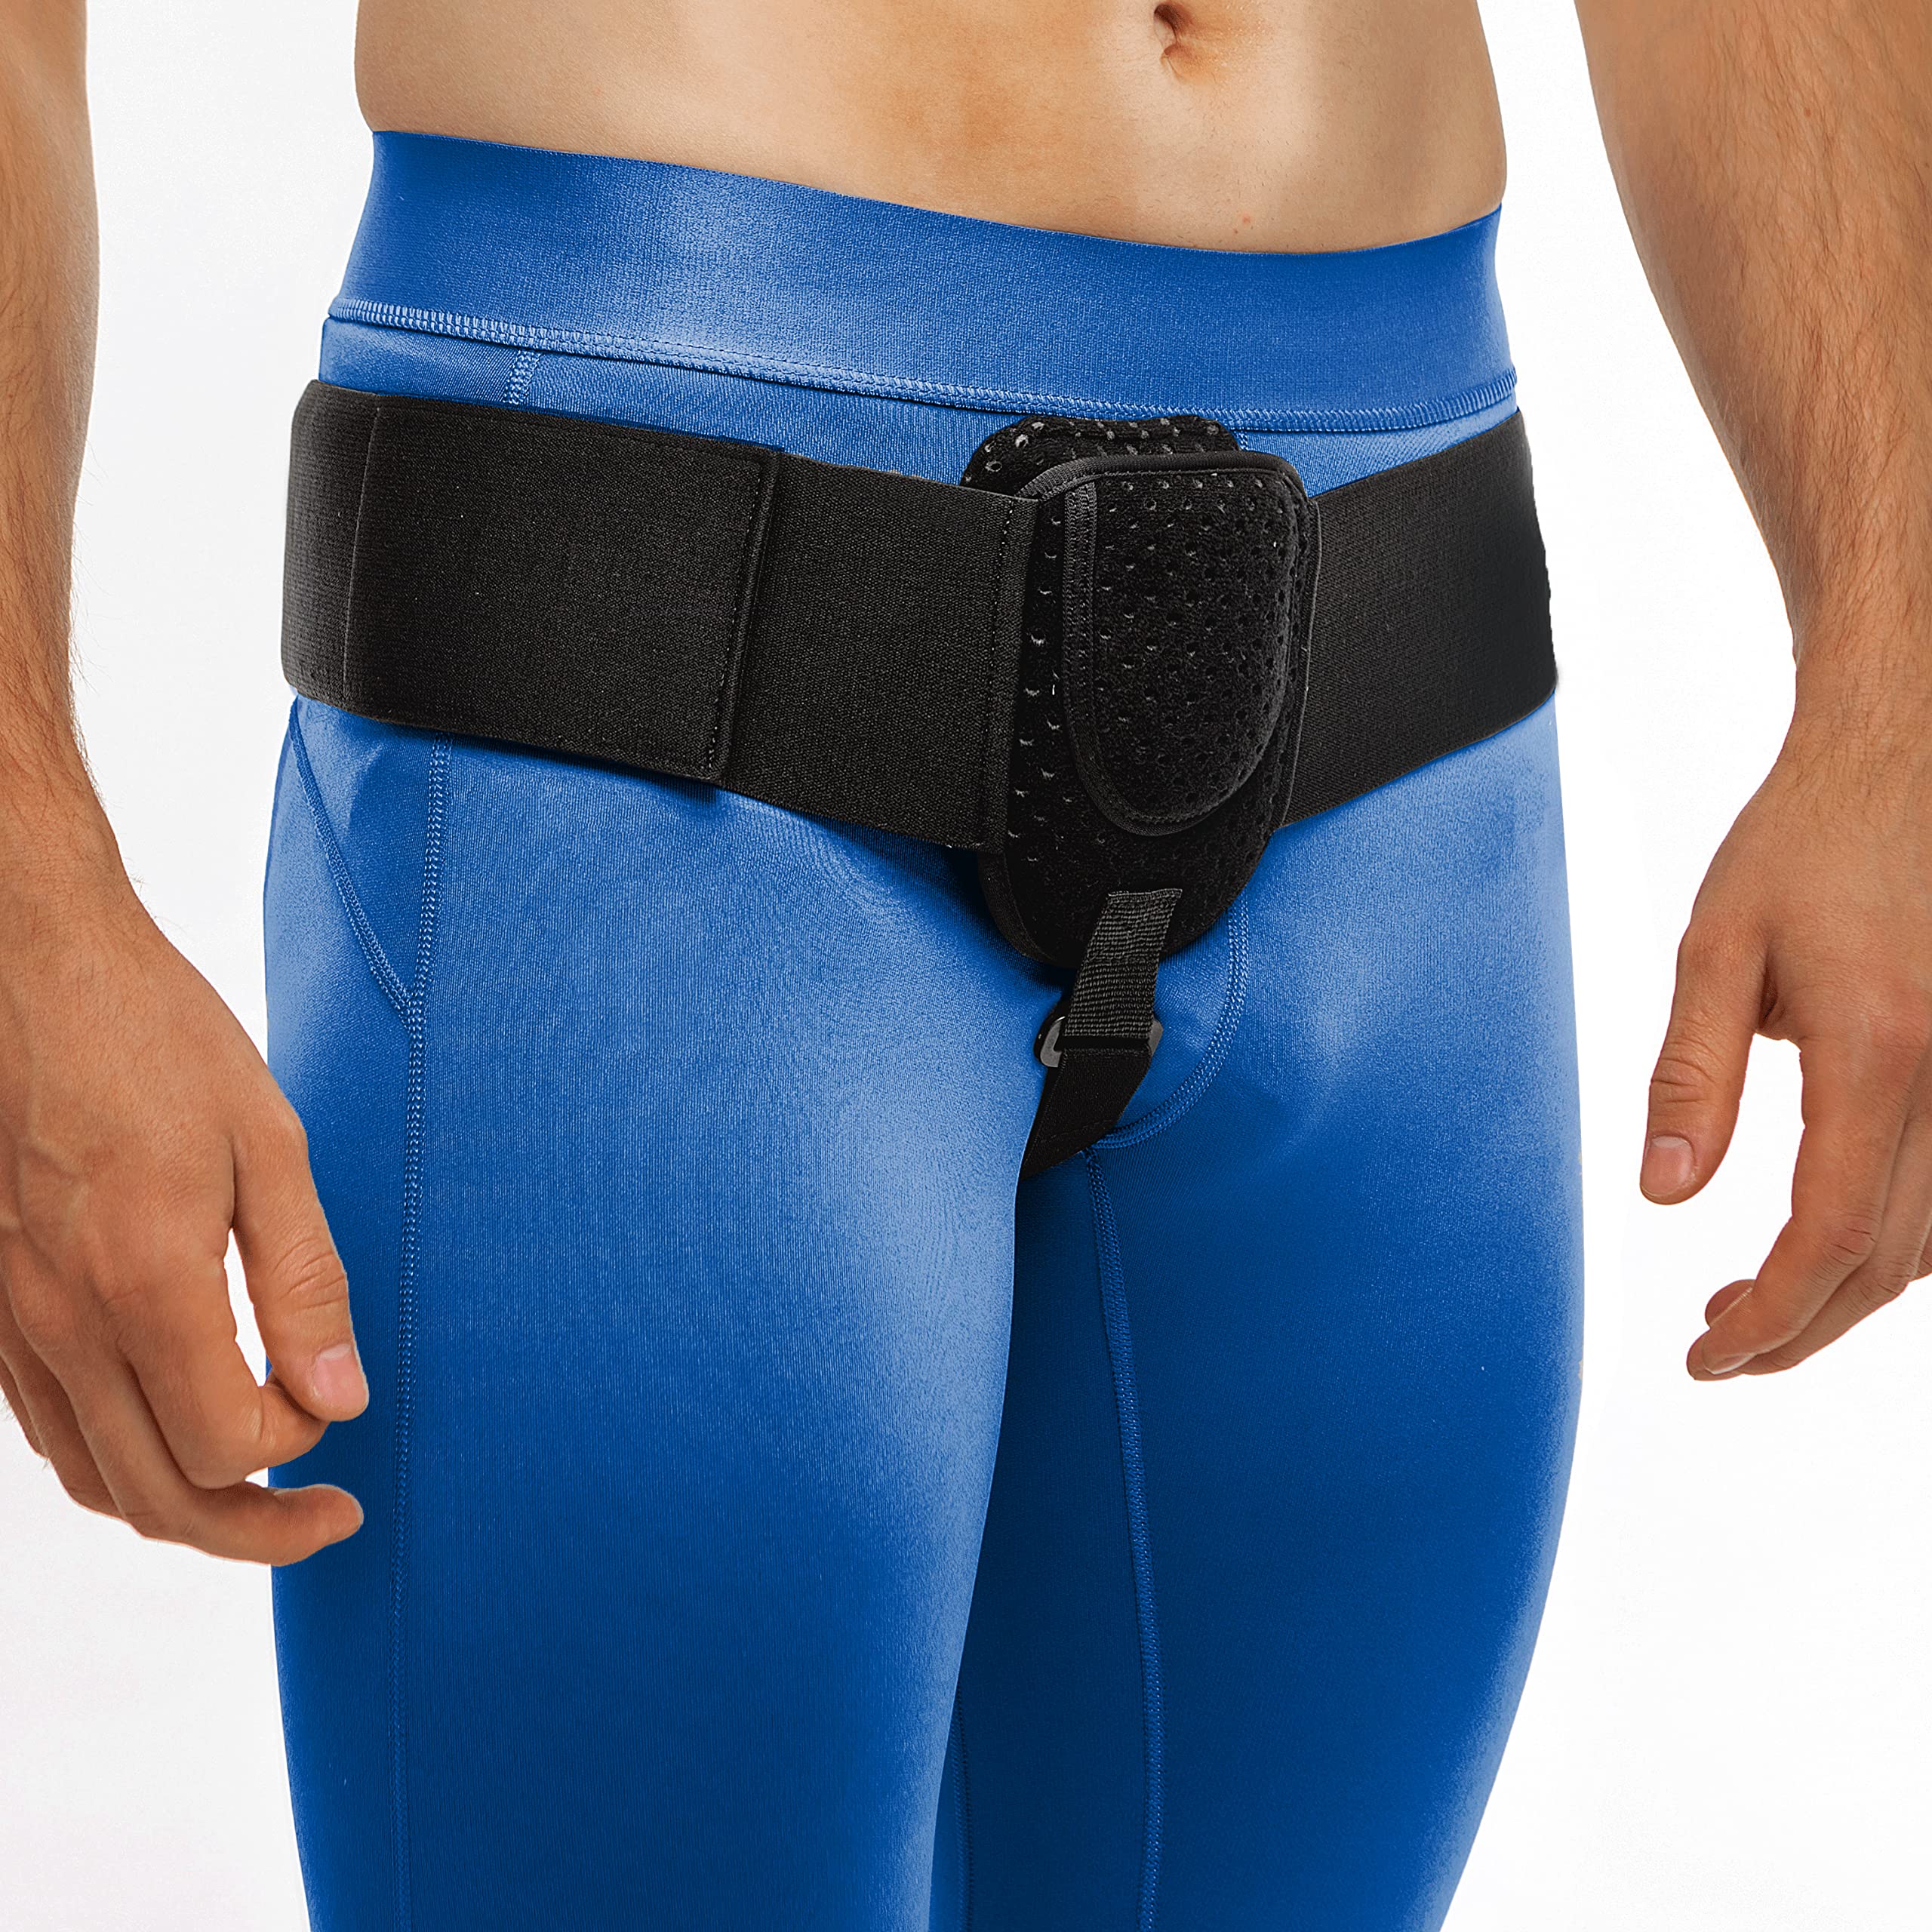 Hernia Belt For Inguinal Hernia Brace Support Truss Belt Underwear